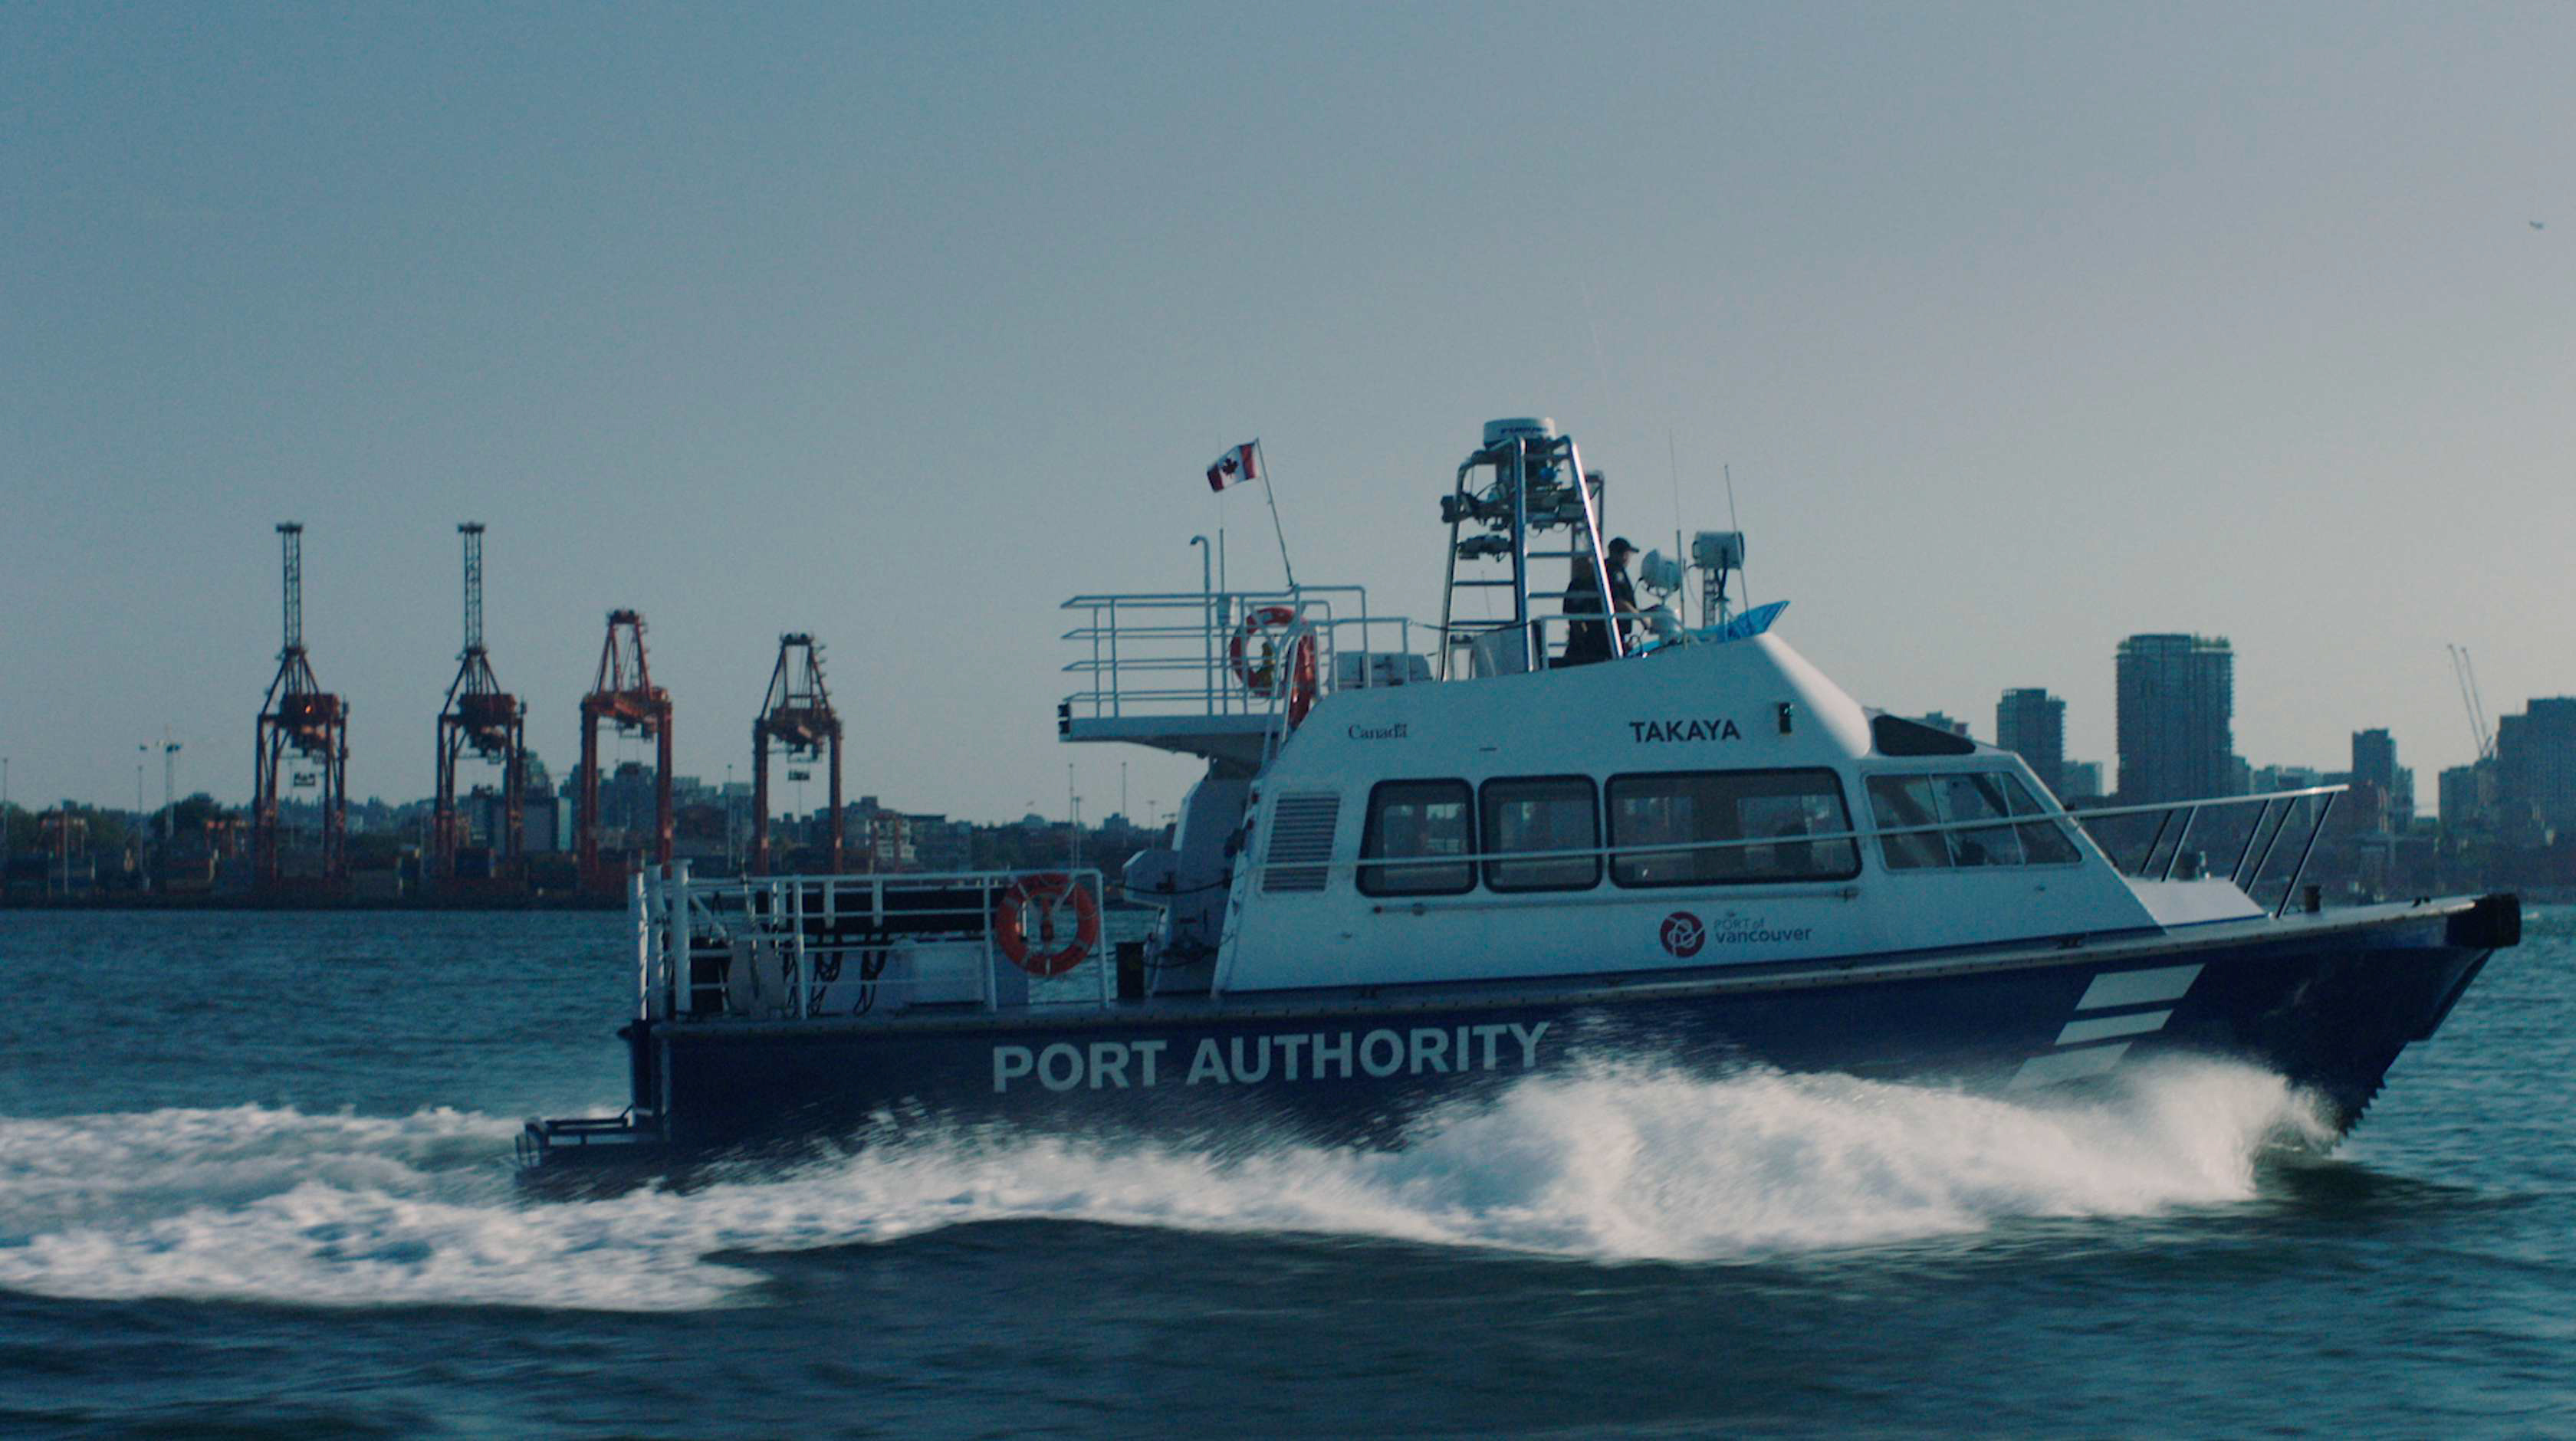 2019-09 Web photo - CAC - Harbour patrol (boat)